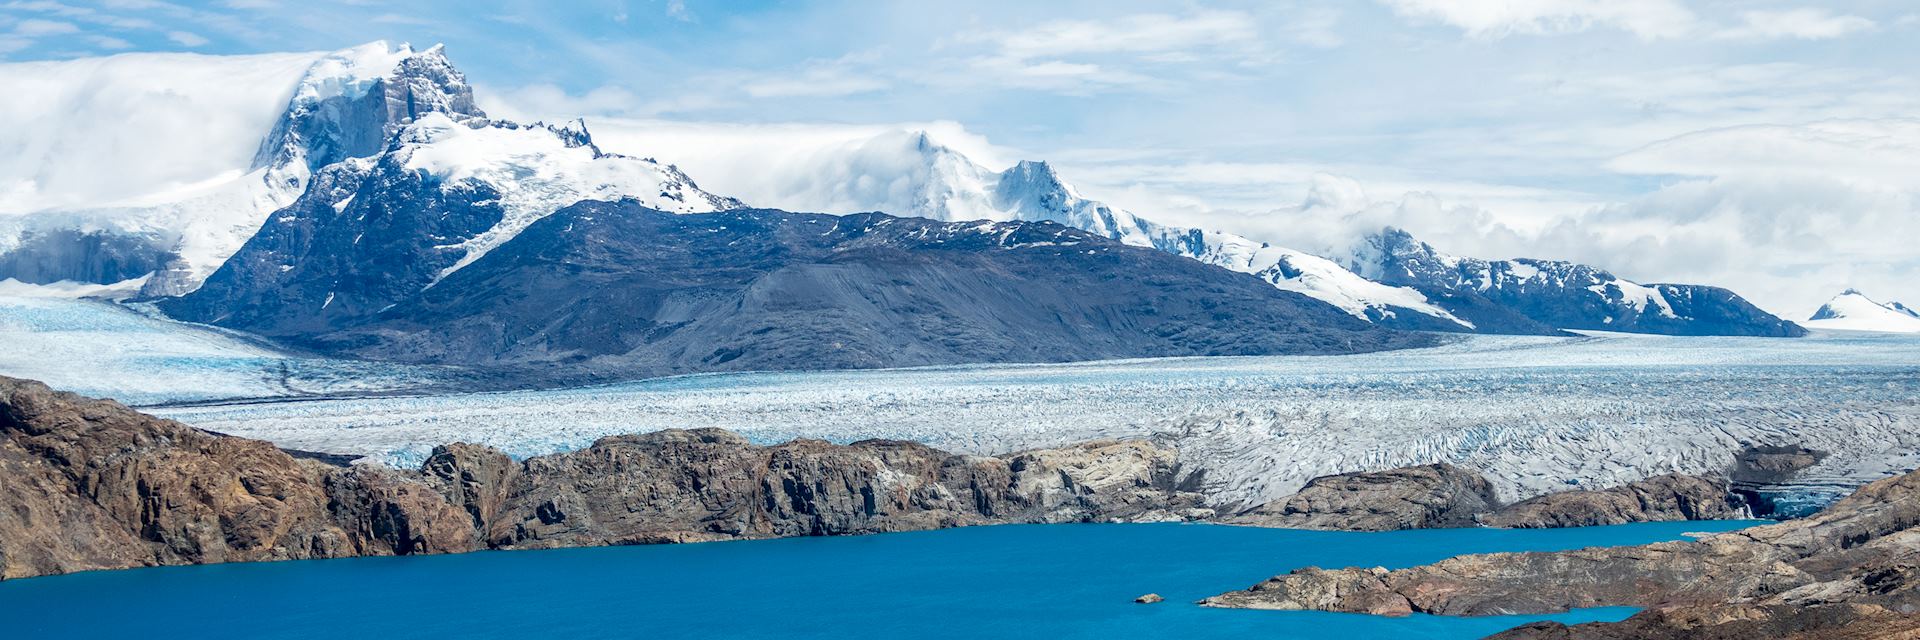 Upsala Glacier, Argentina